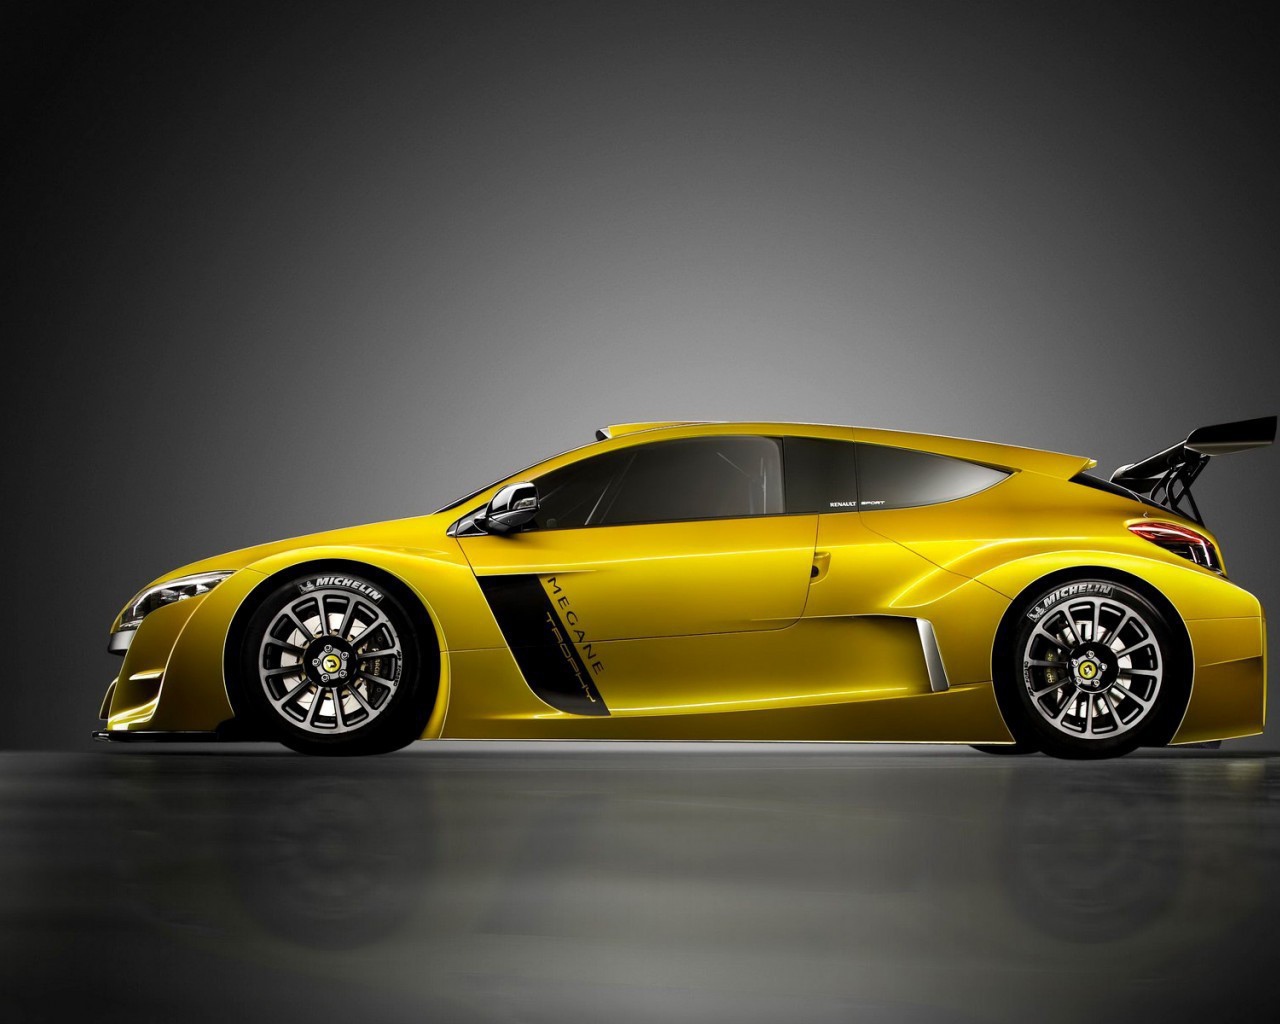 	 Yellow luxury car